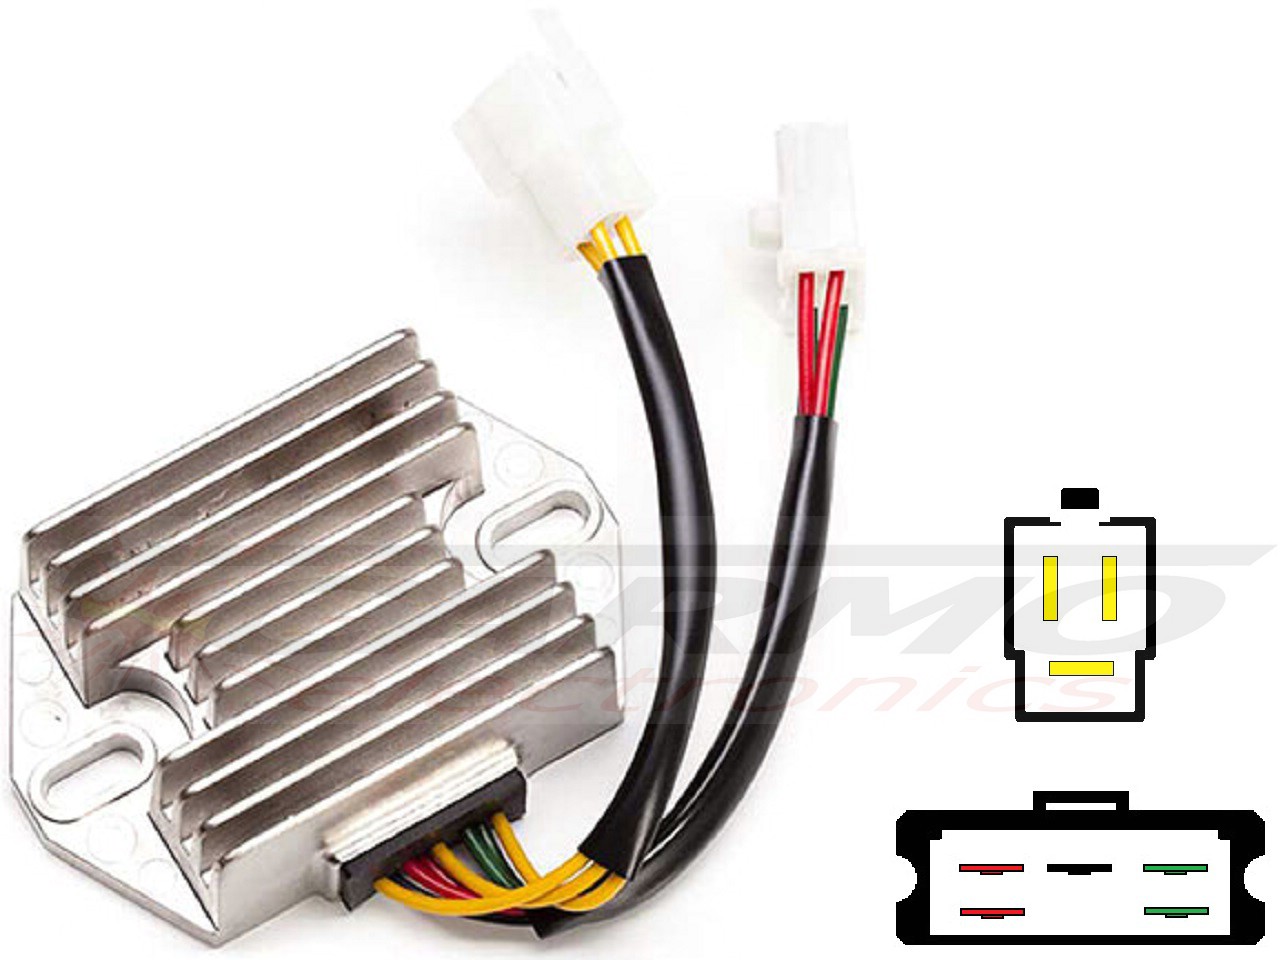 CARR641 Transalp Africa twin Shadow Intruder MOSFET Voltage regulator rectifier - Click Image to Close